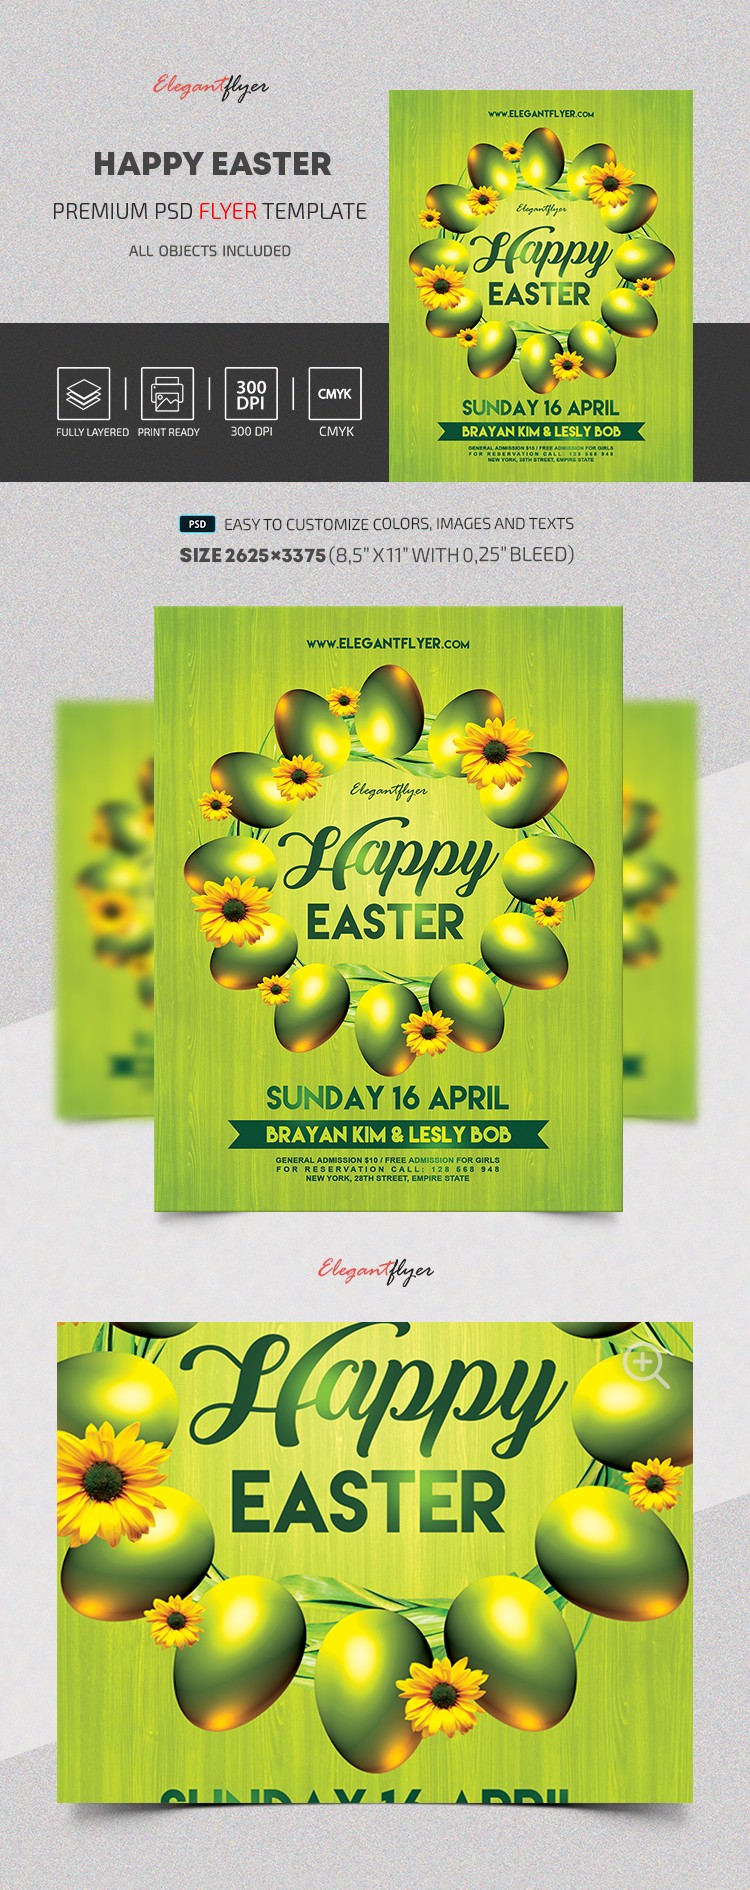 Party Flyer for Easter by ElegantFlyer